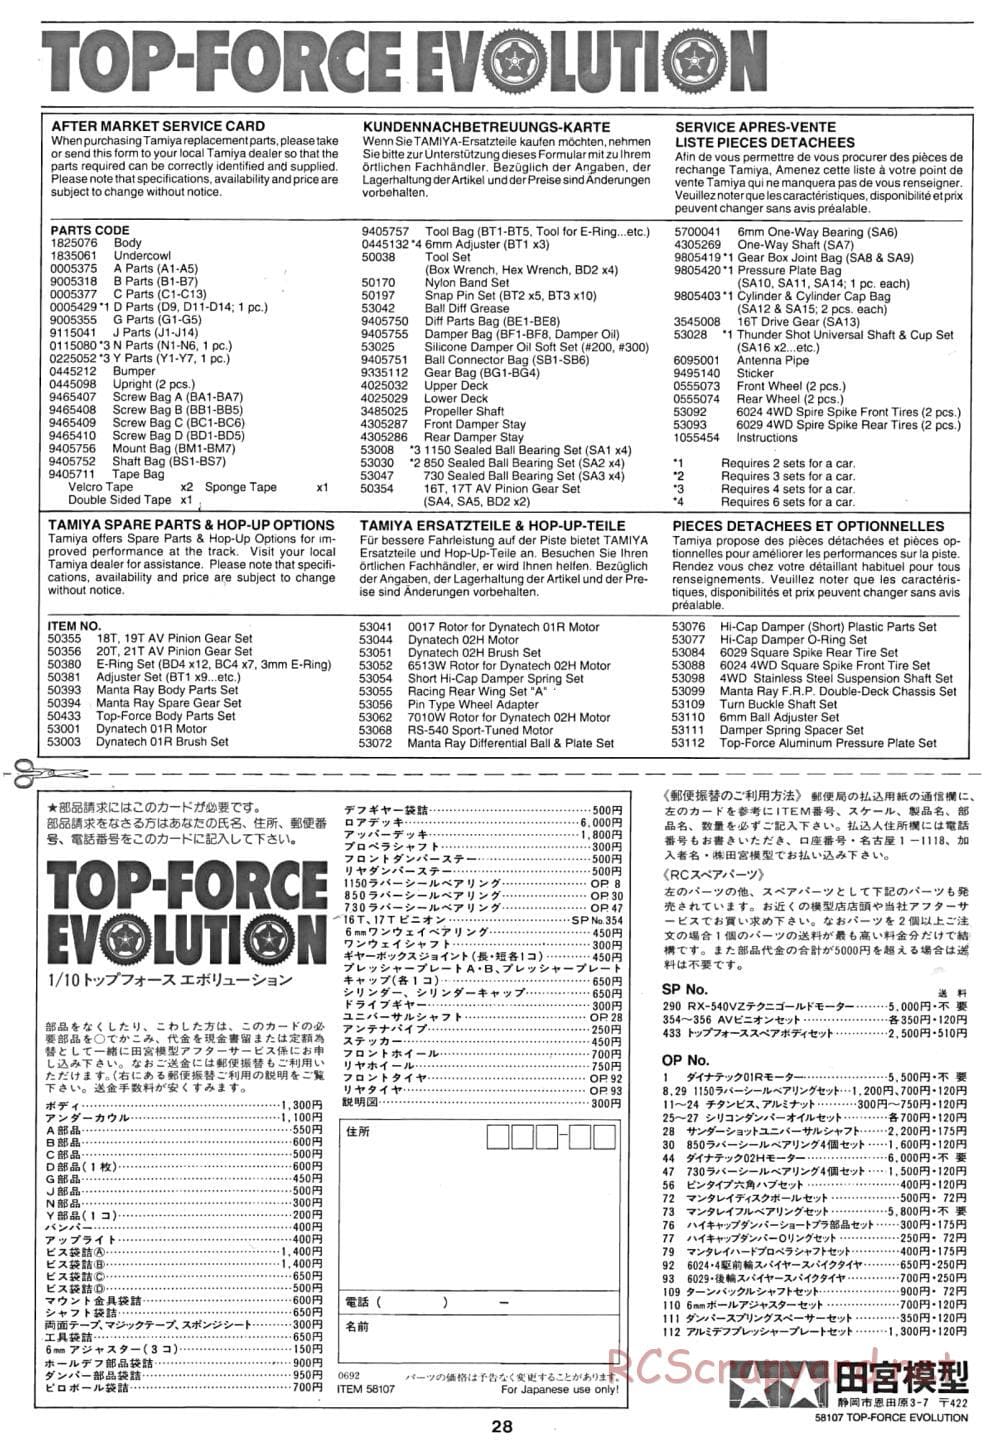 Tamiya - Top Force Evolution Chassis - Manual - Page 28